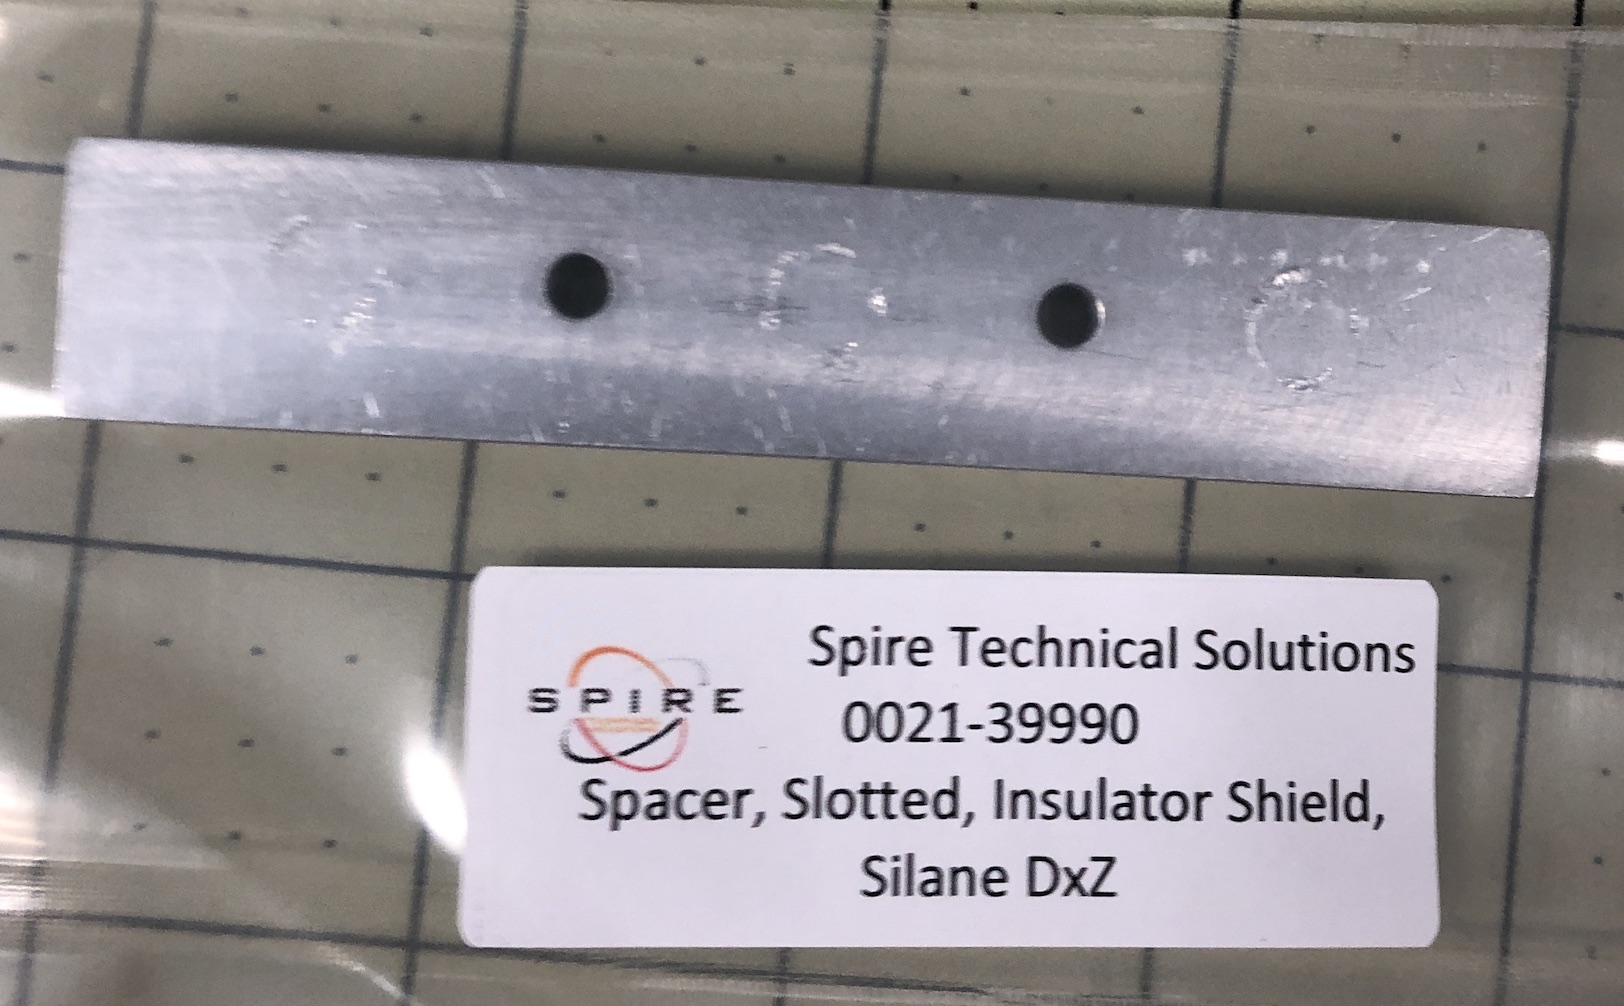 Spacer, Slotted, Insulator Shield, Silane DxZ